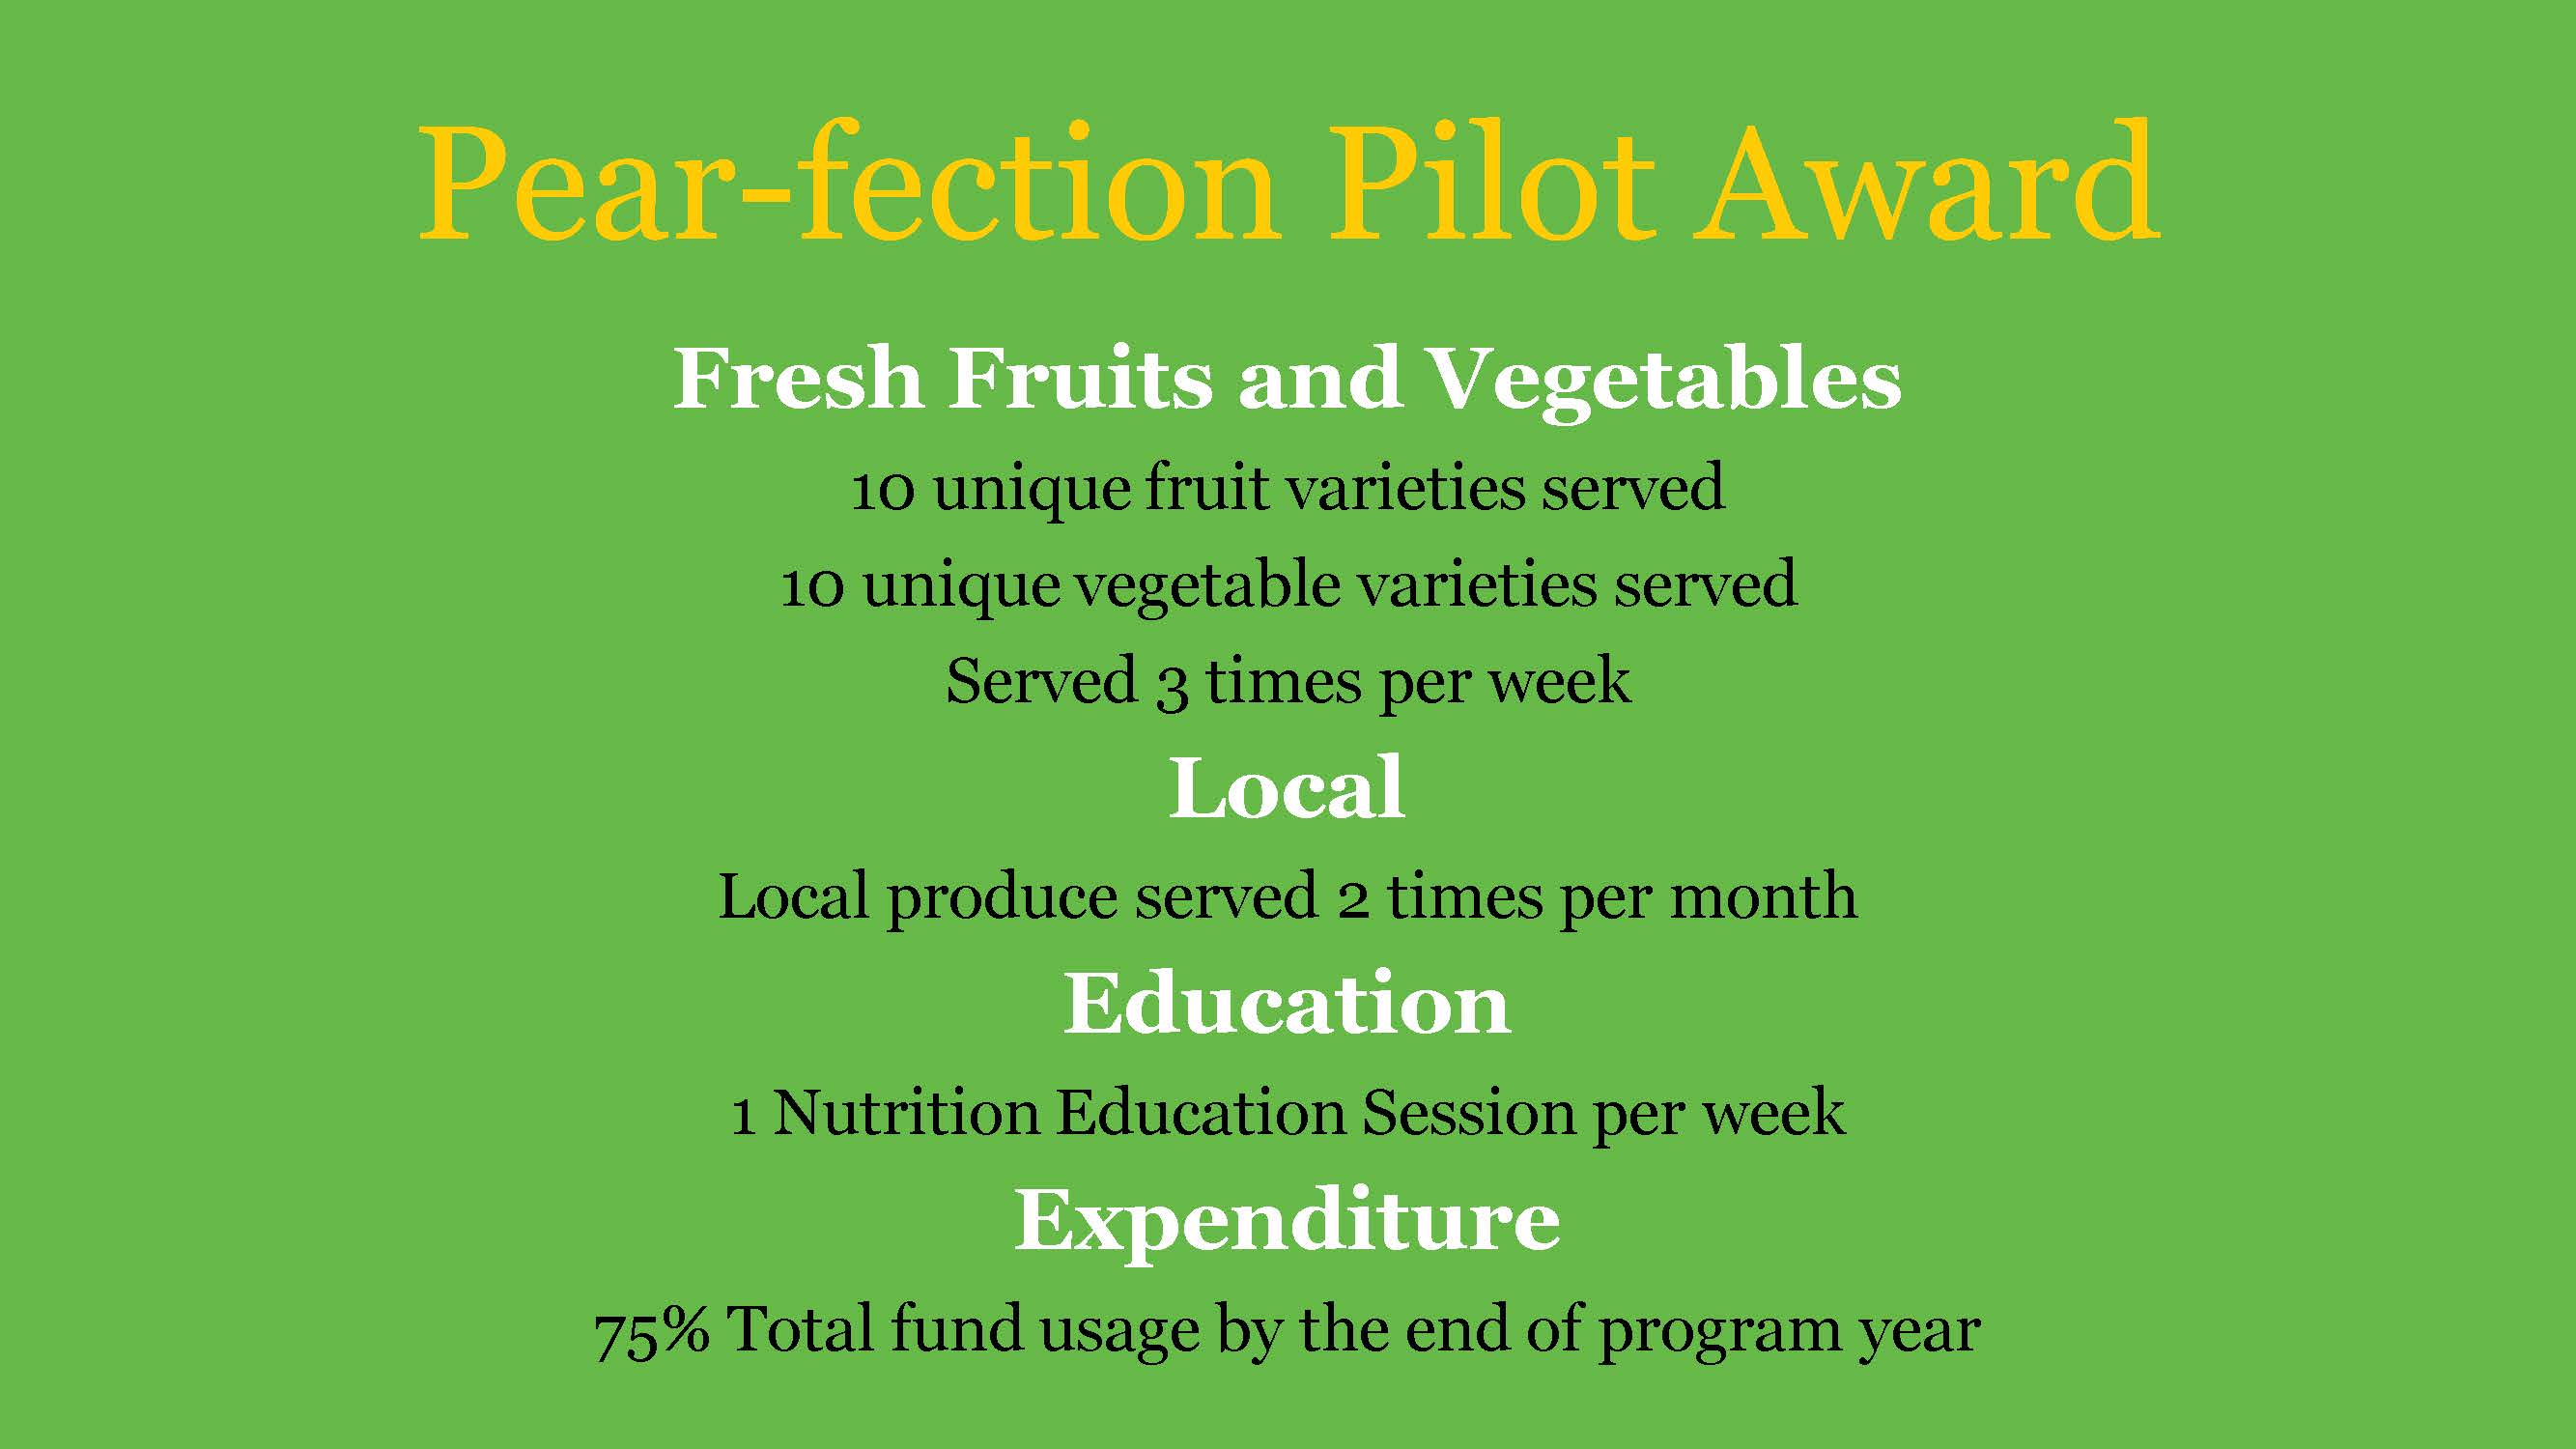 Pear-fection Award Criteria